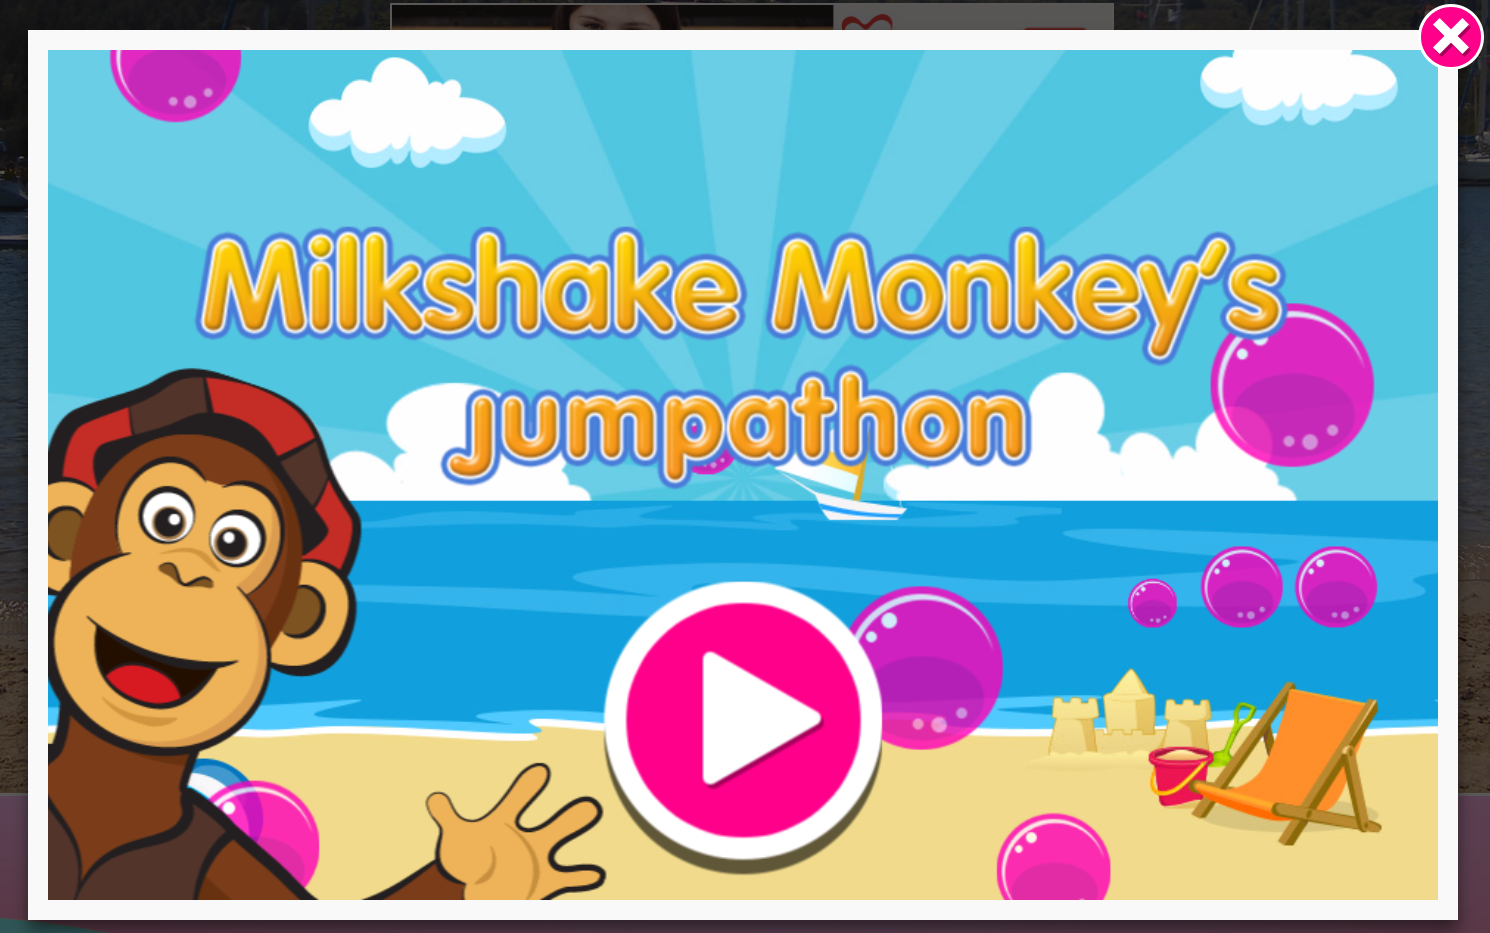 Milkshake Monkey also has his very own game : Jumpathon.